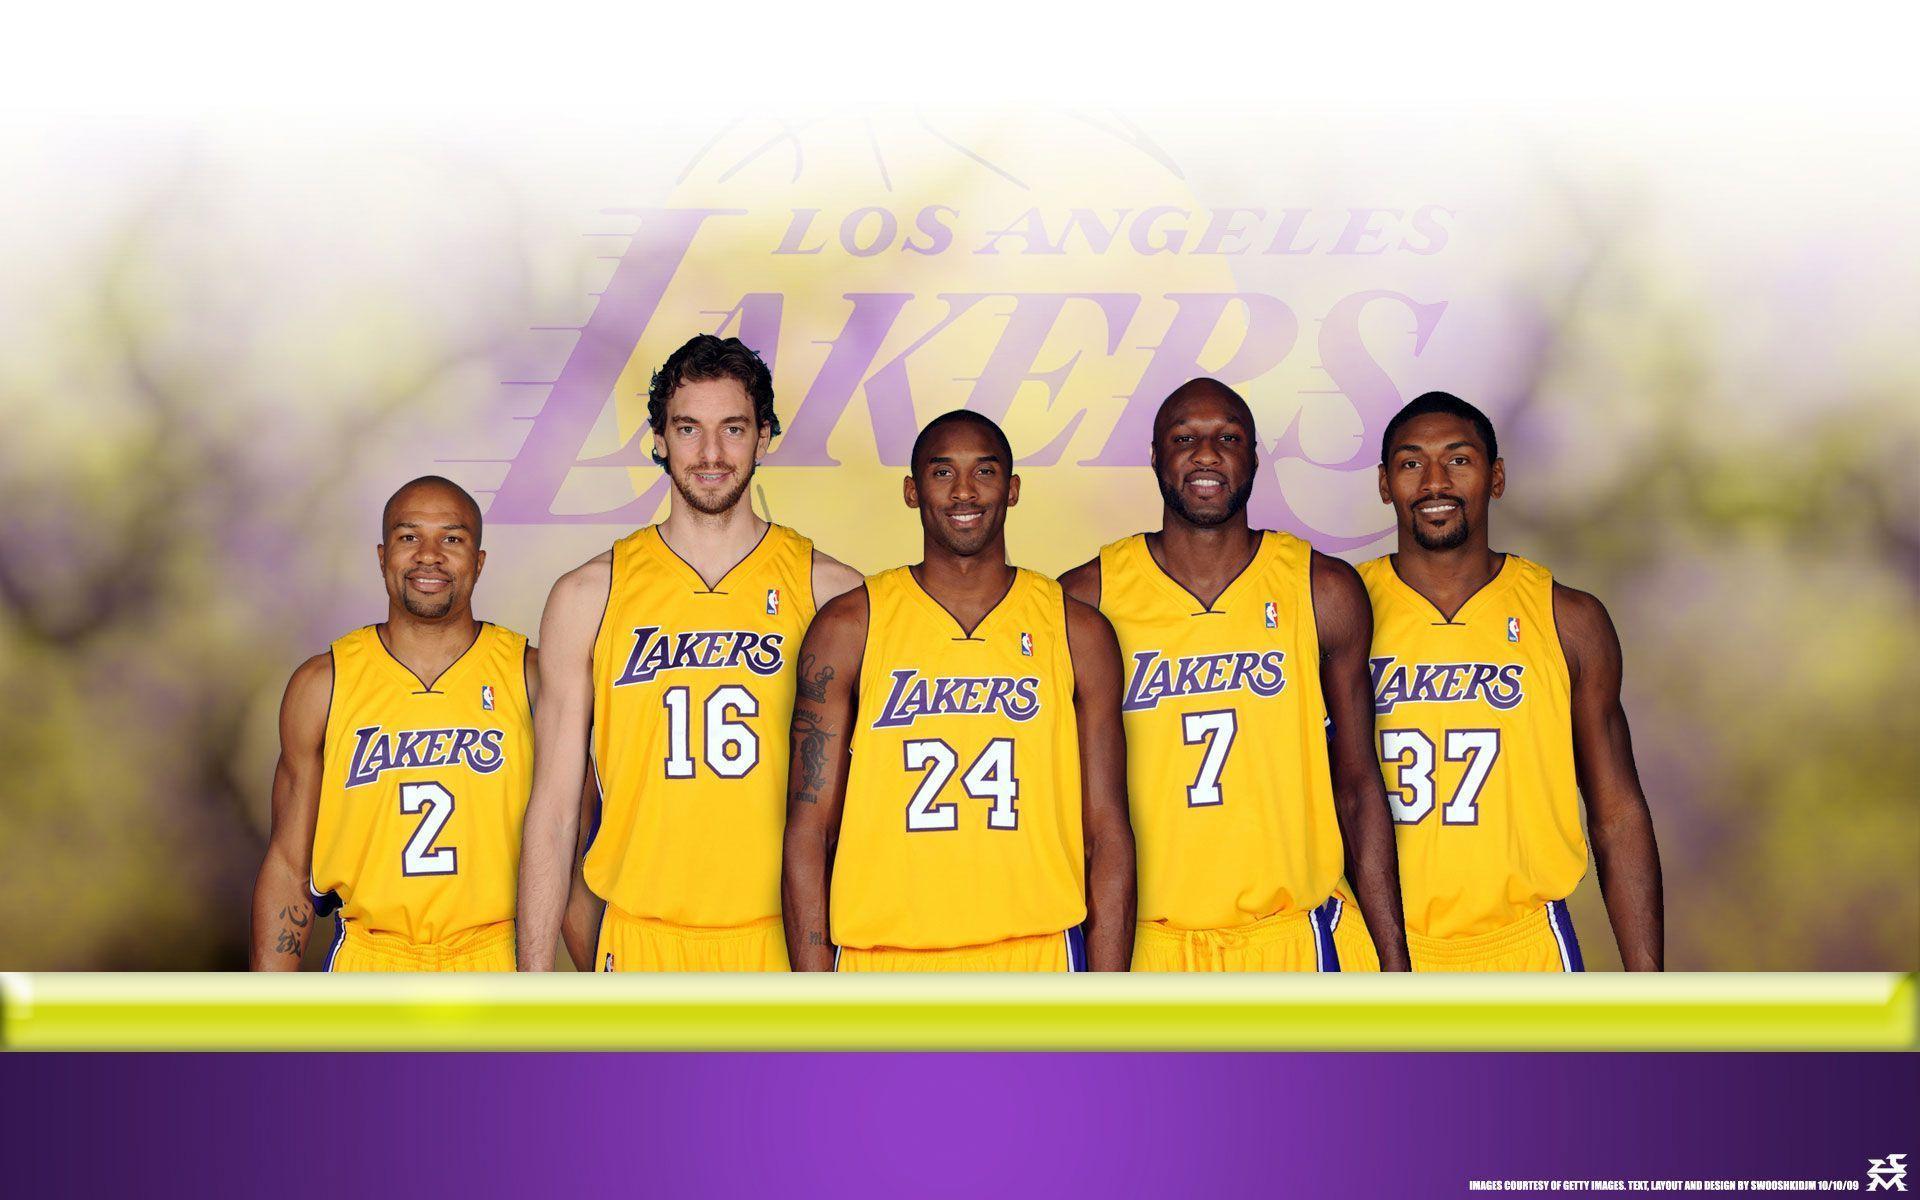 LA Lakers 2010 Starting Five Widescreen Wallpaper. Basketball